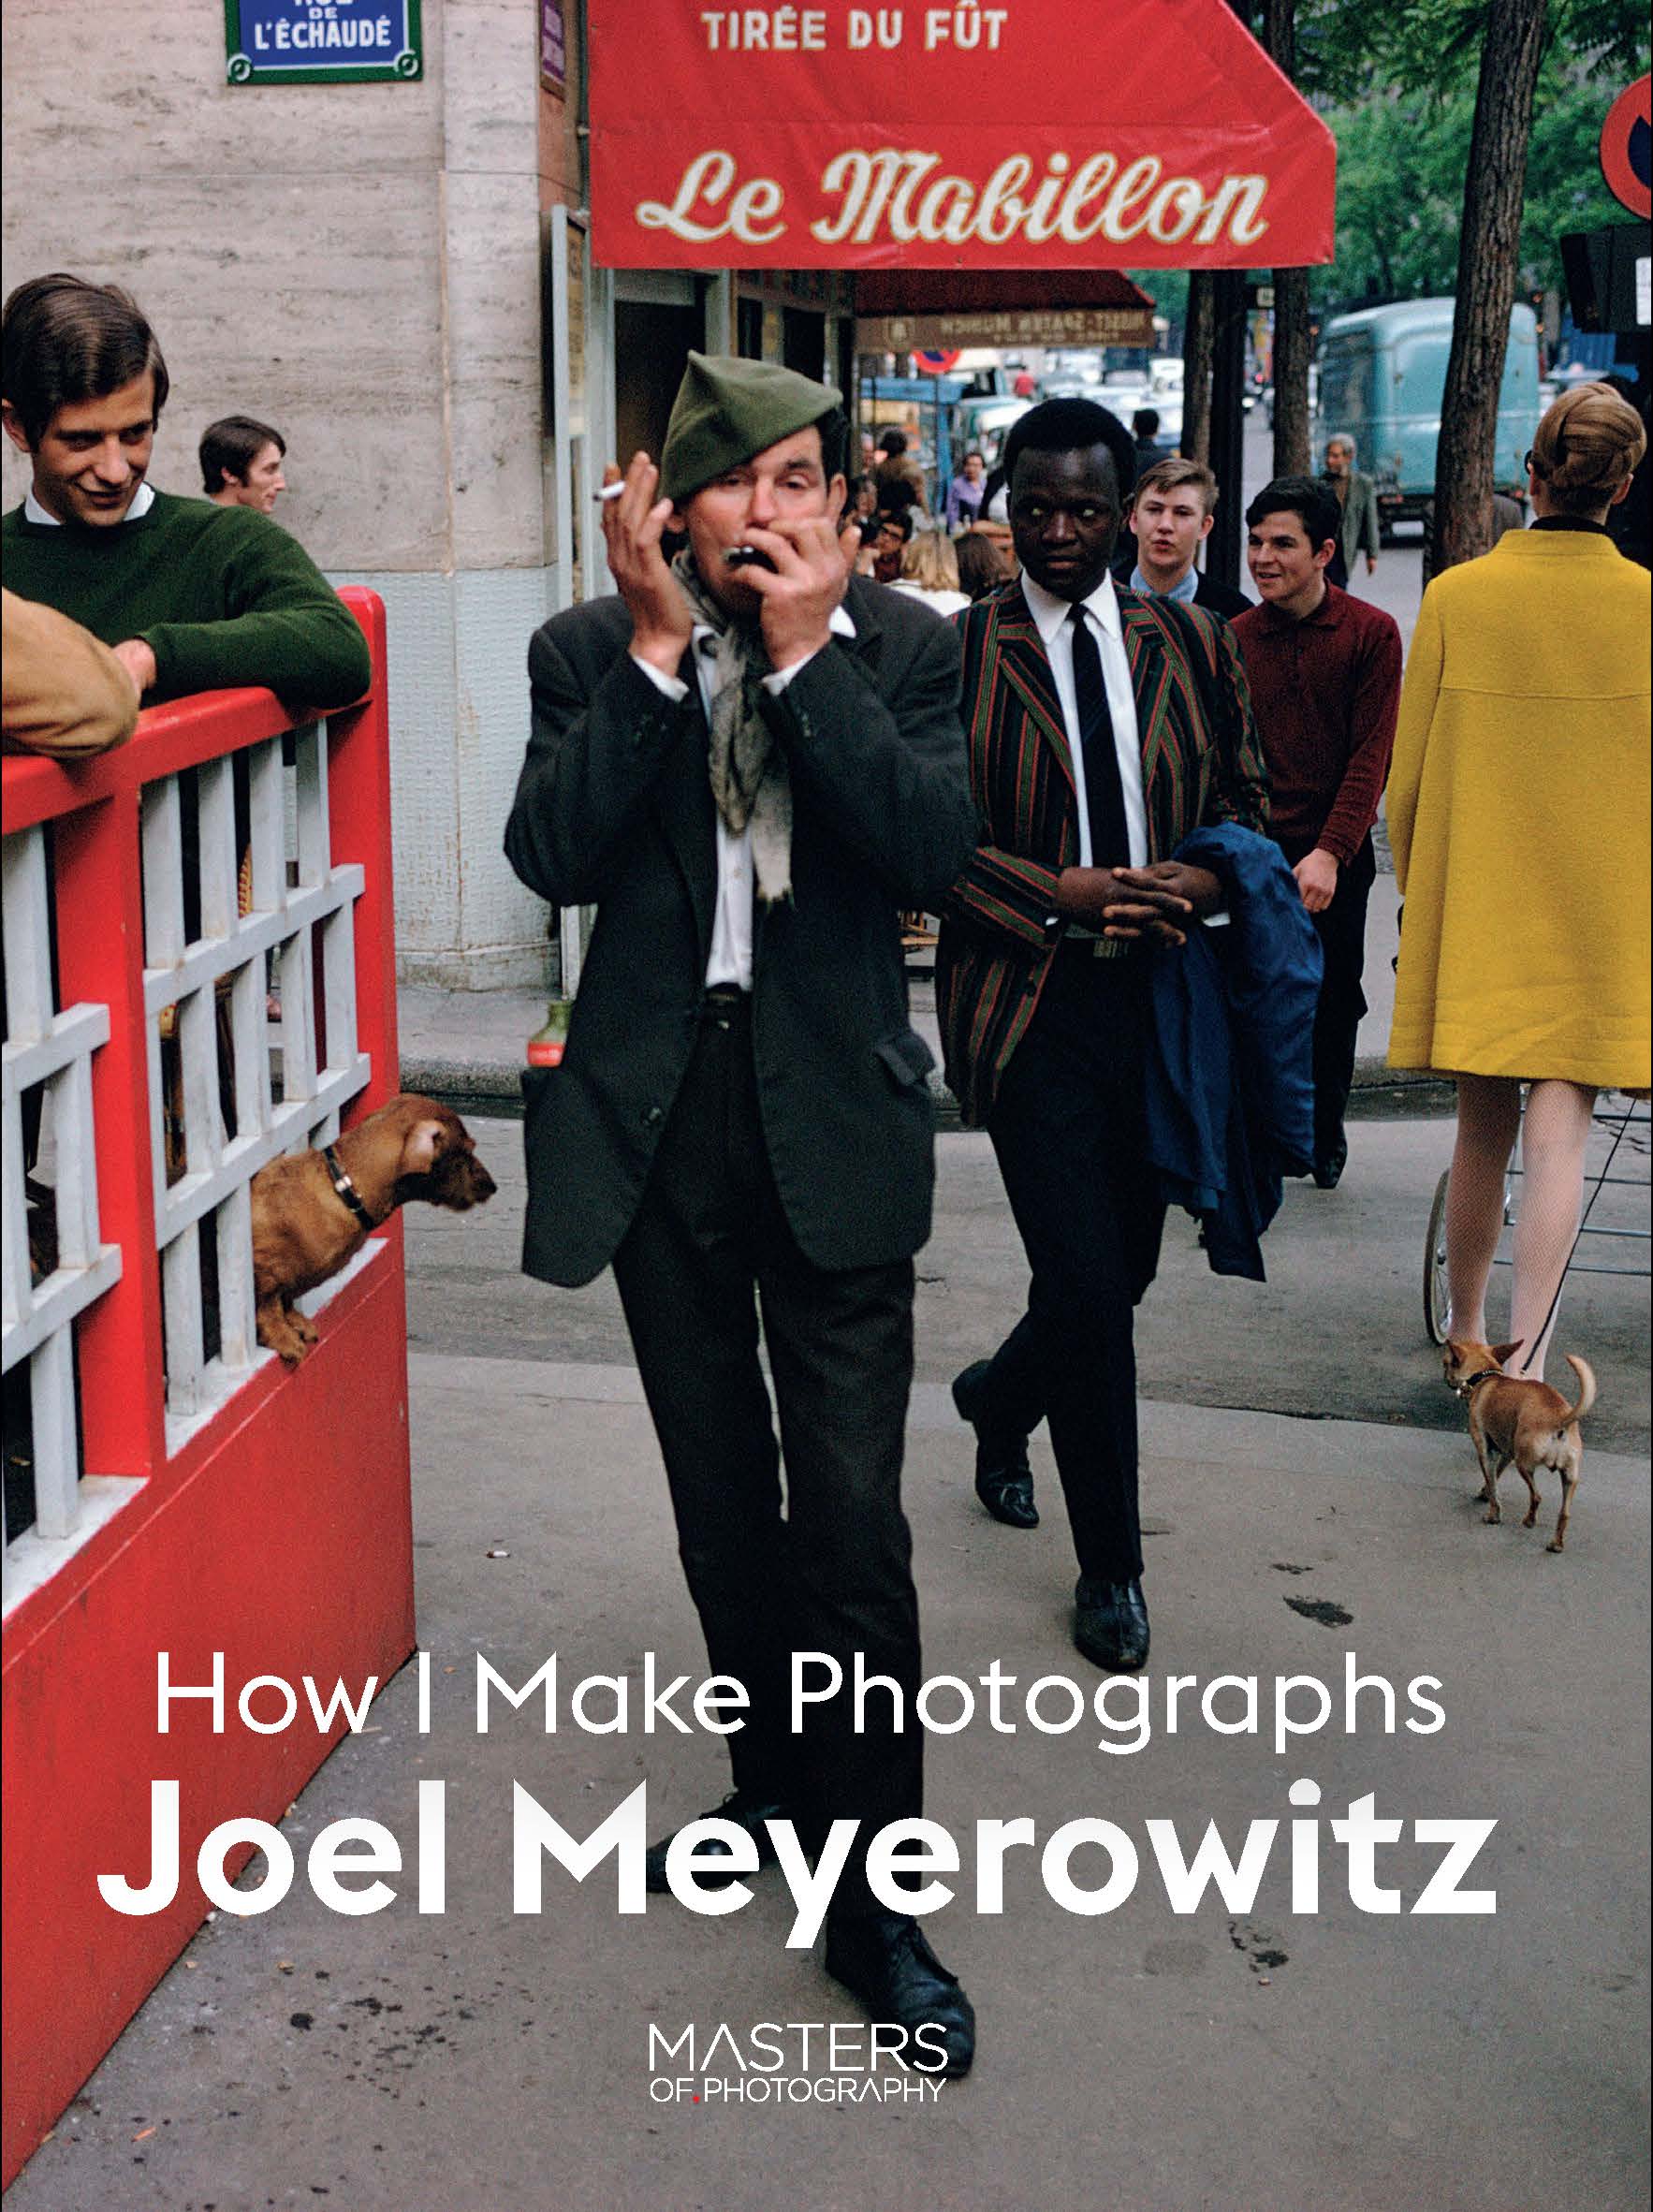 Joel Meyerowitz Teaches You How He Makes Photographs